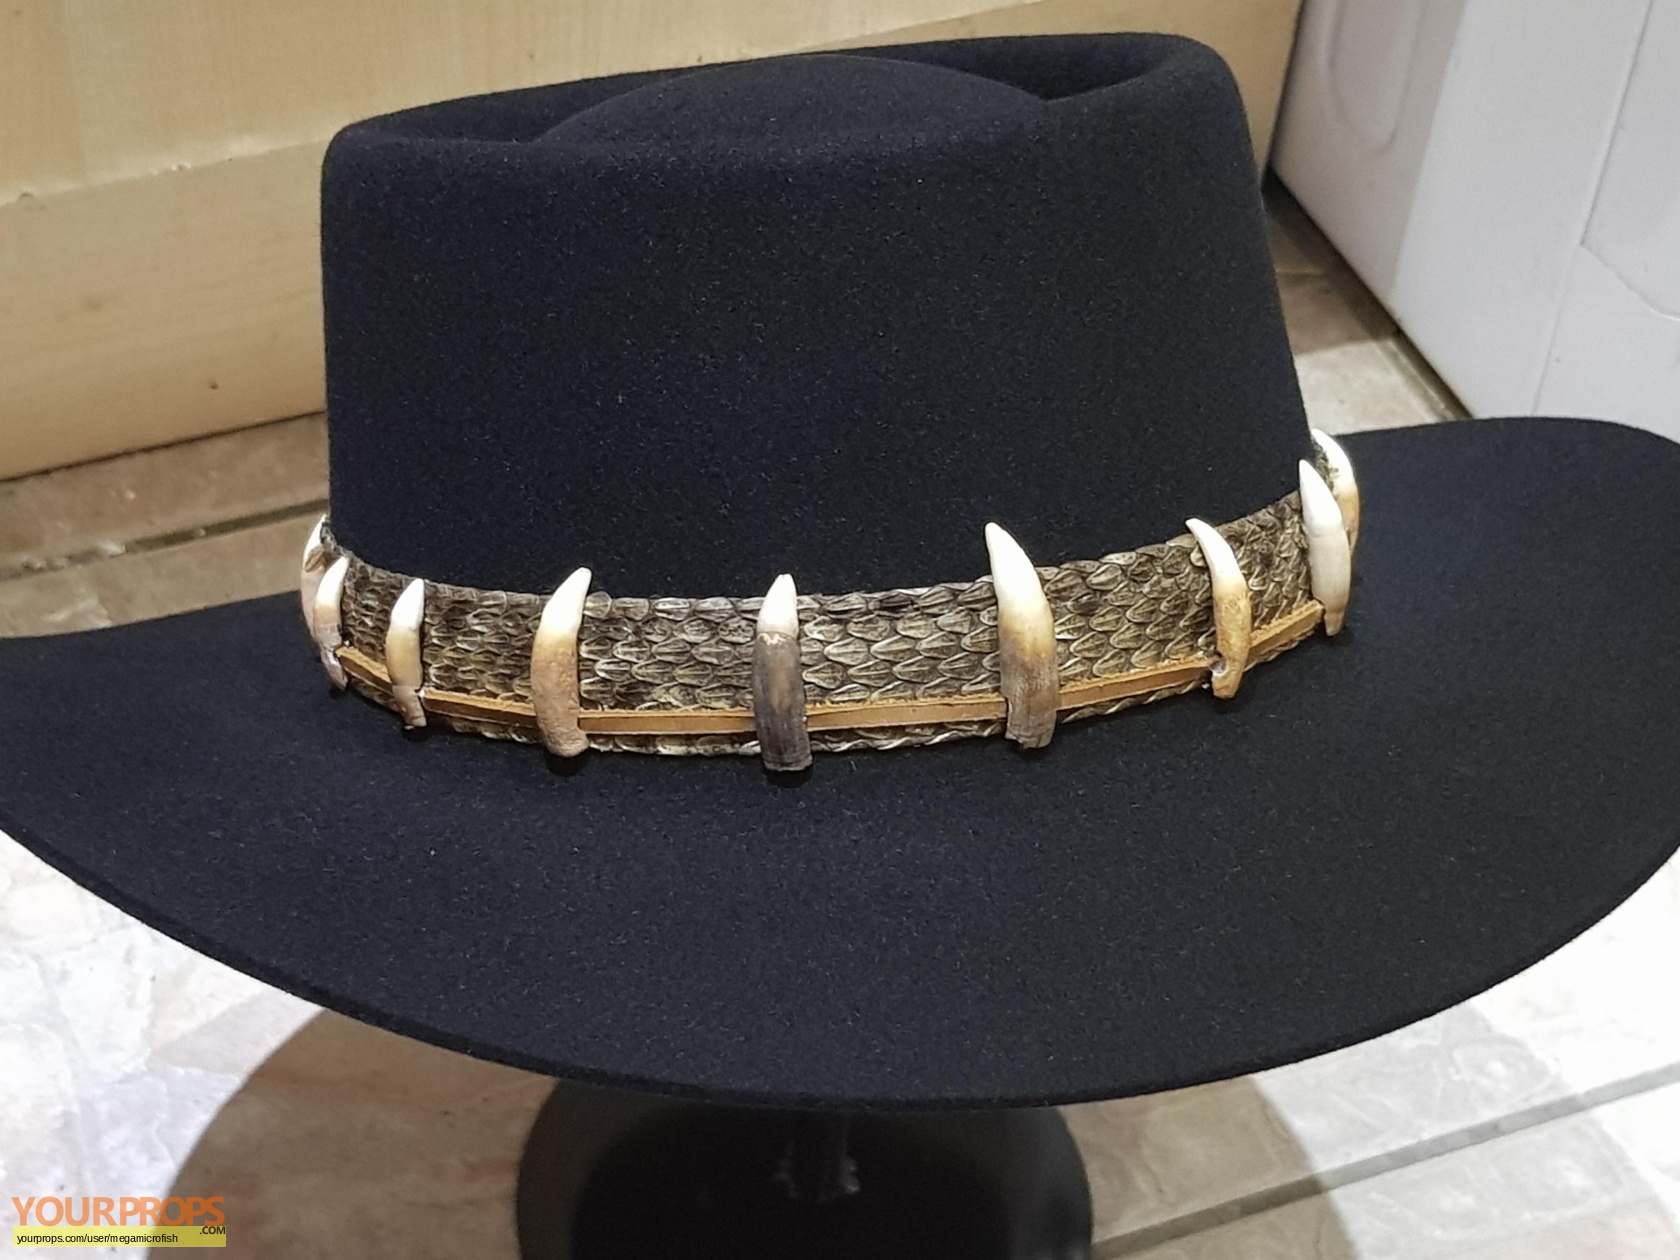 crocodile dundee hat